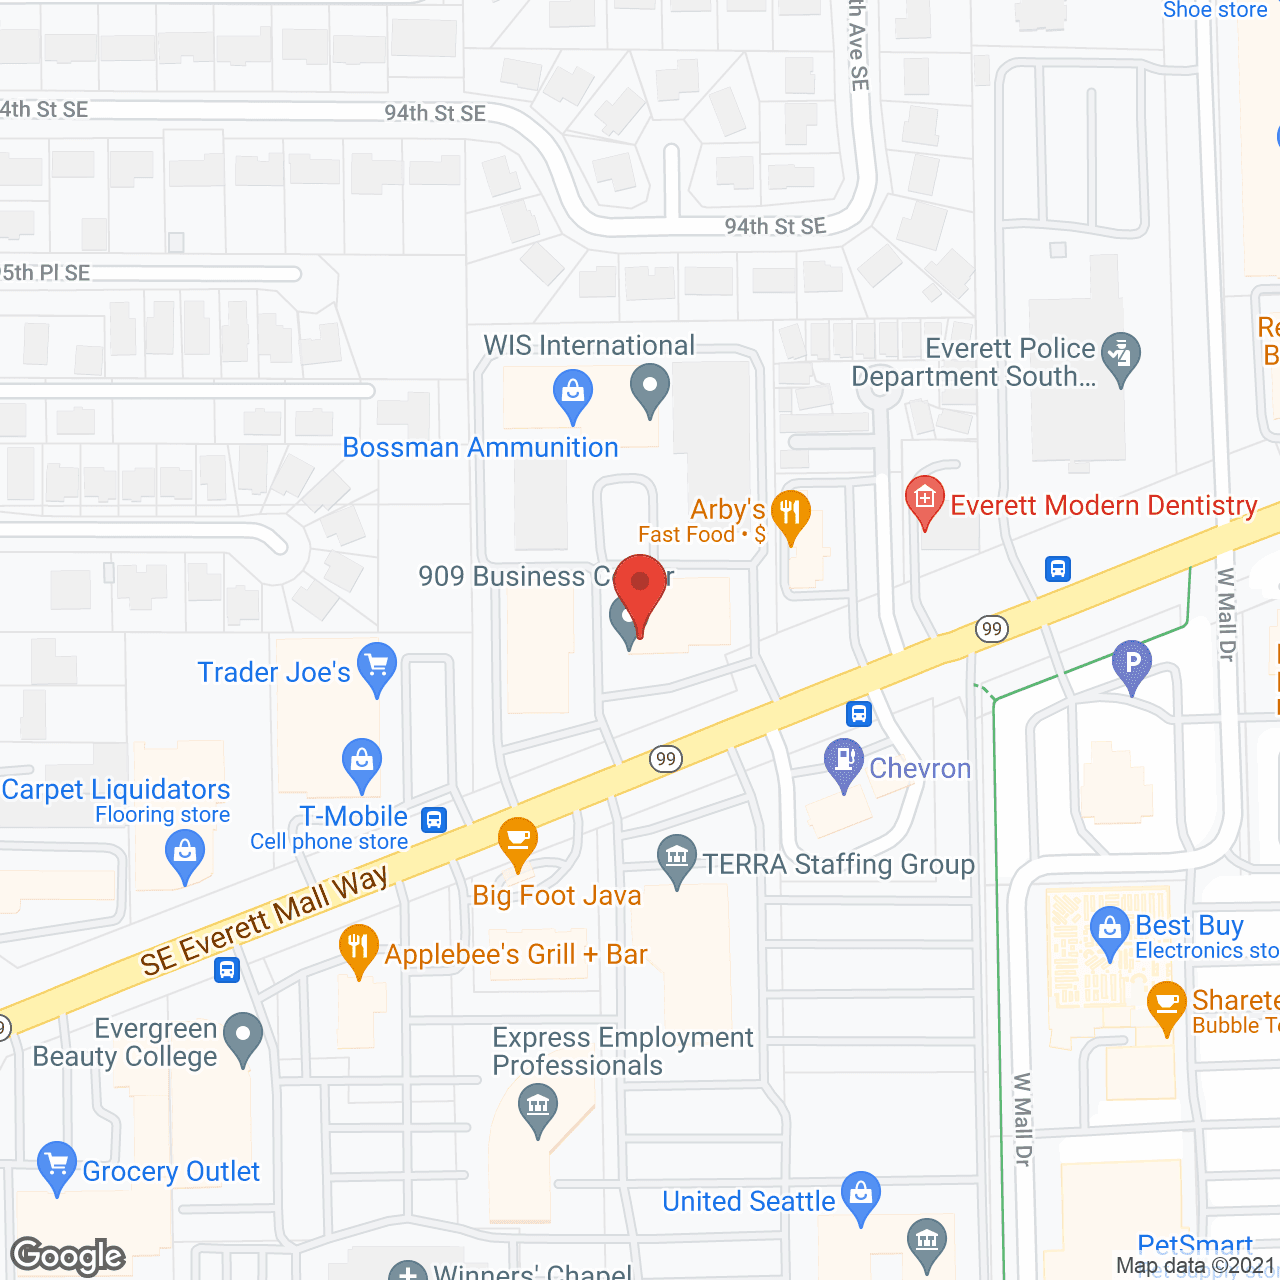 Home Instead - Everett, WA in google map